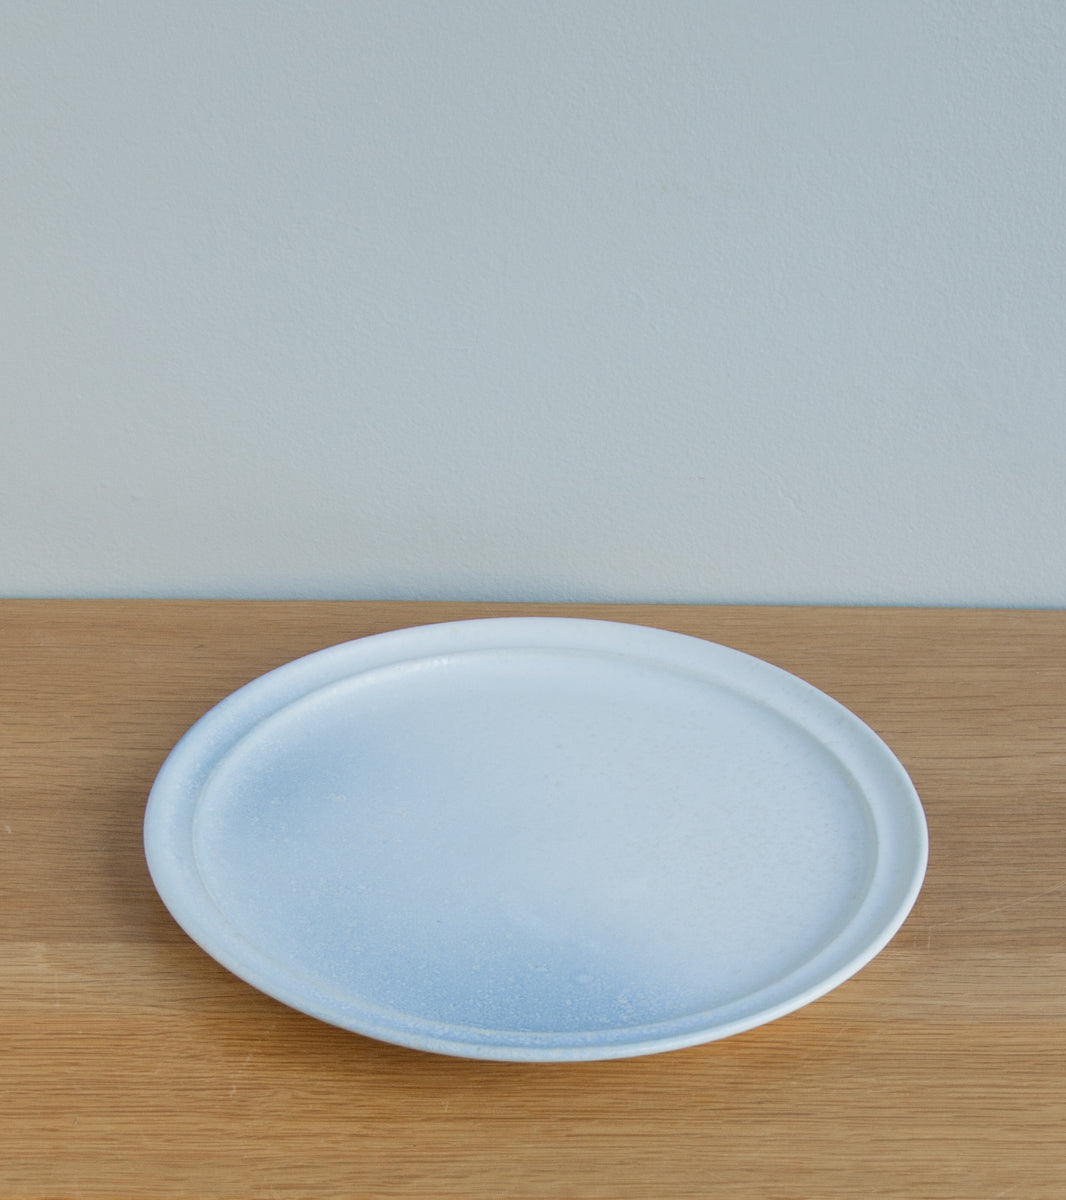 Rimmed 'Noma' Plate White & Blue Glaze Kasper Würtz - Image 1